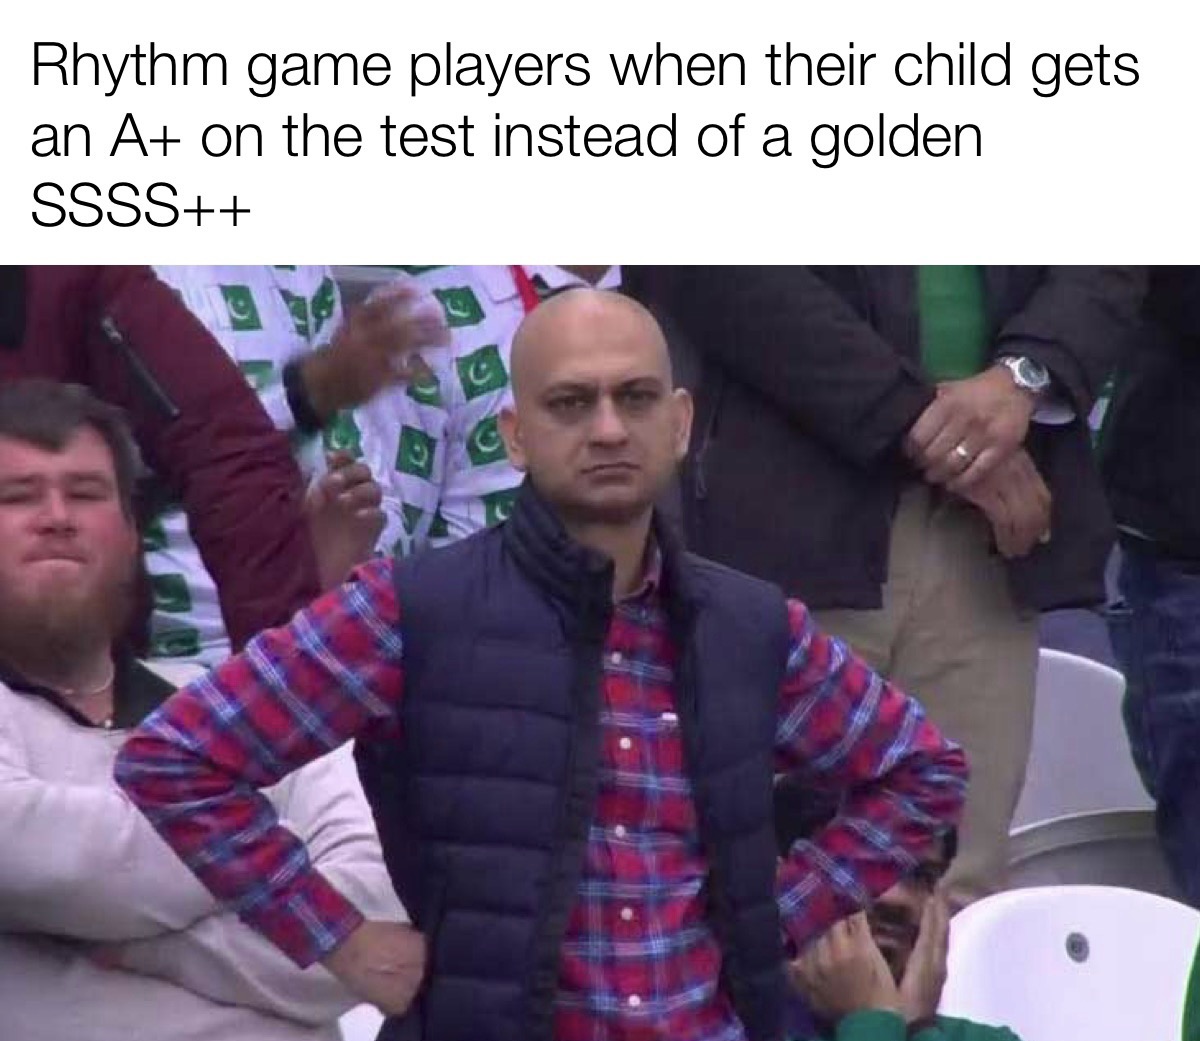 Dank Memes - hospice nurse meme - Rhythm game players when their child gets an A on the test instead of a golden Ssss